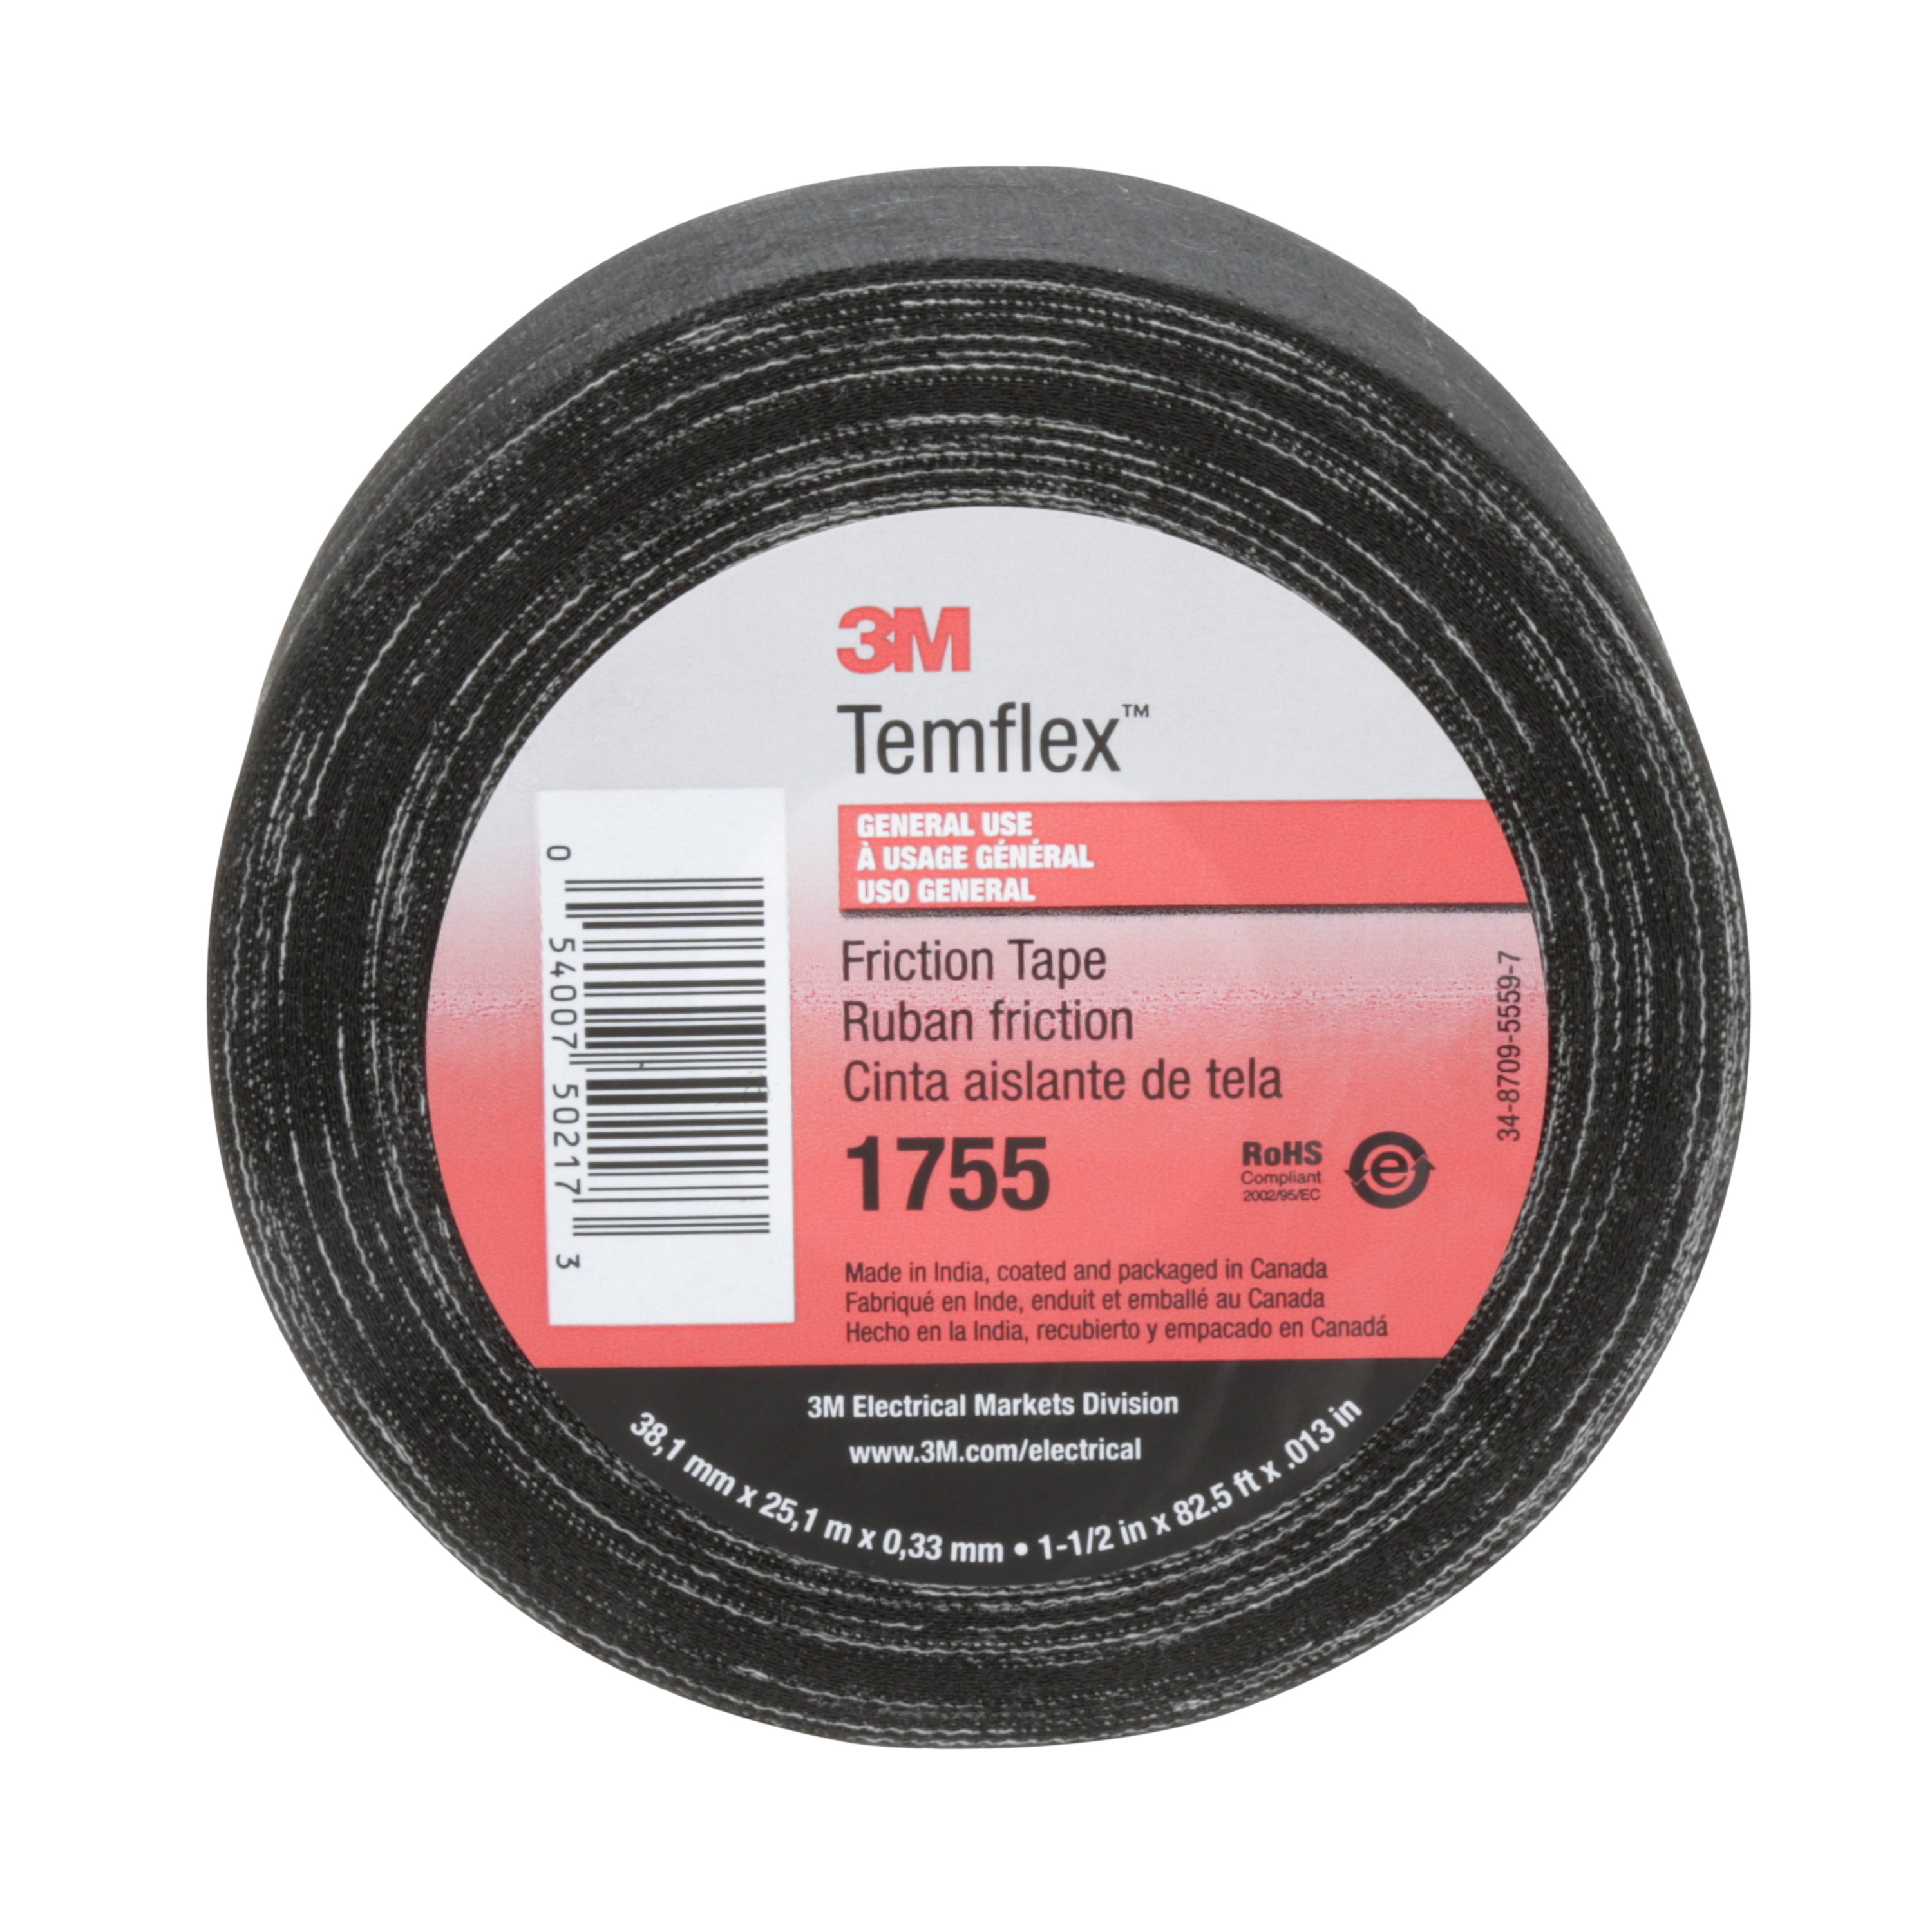 3M™ Temflex™ Cotton Friction Tape 1755, 1-1/2 in x 82-1/2 ft, Black, 30
rolls/Case